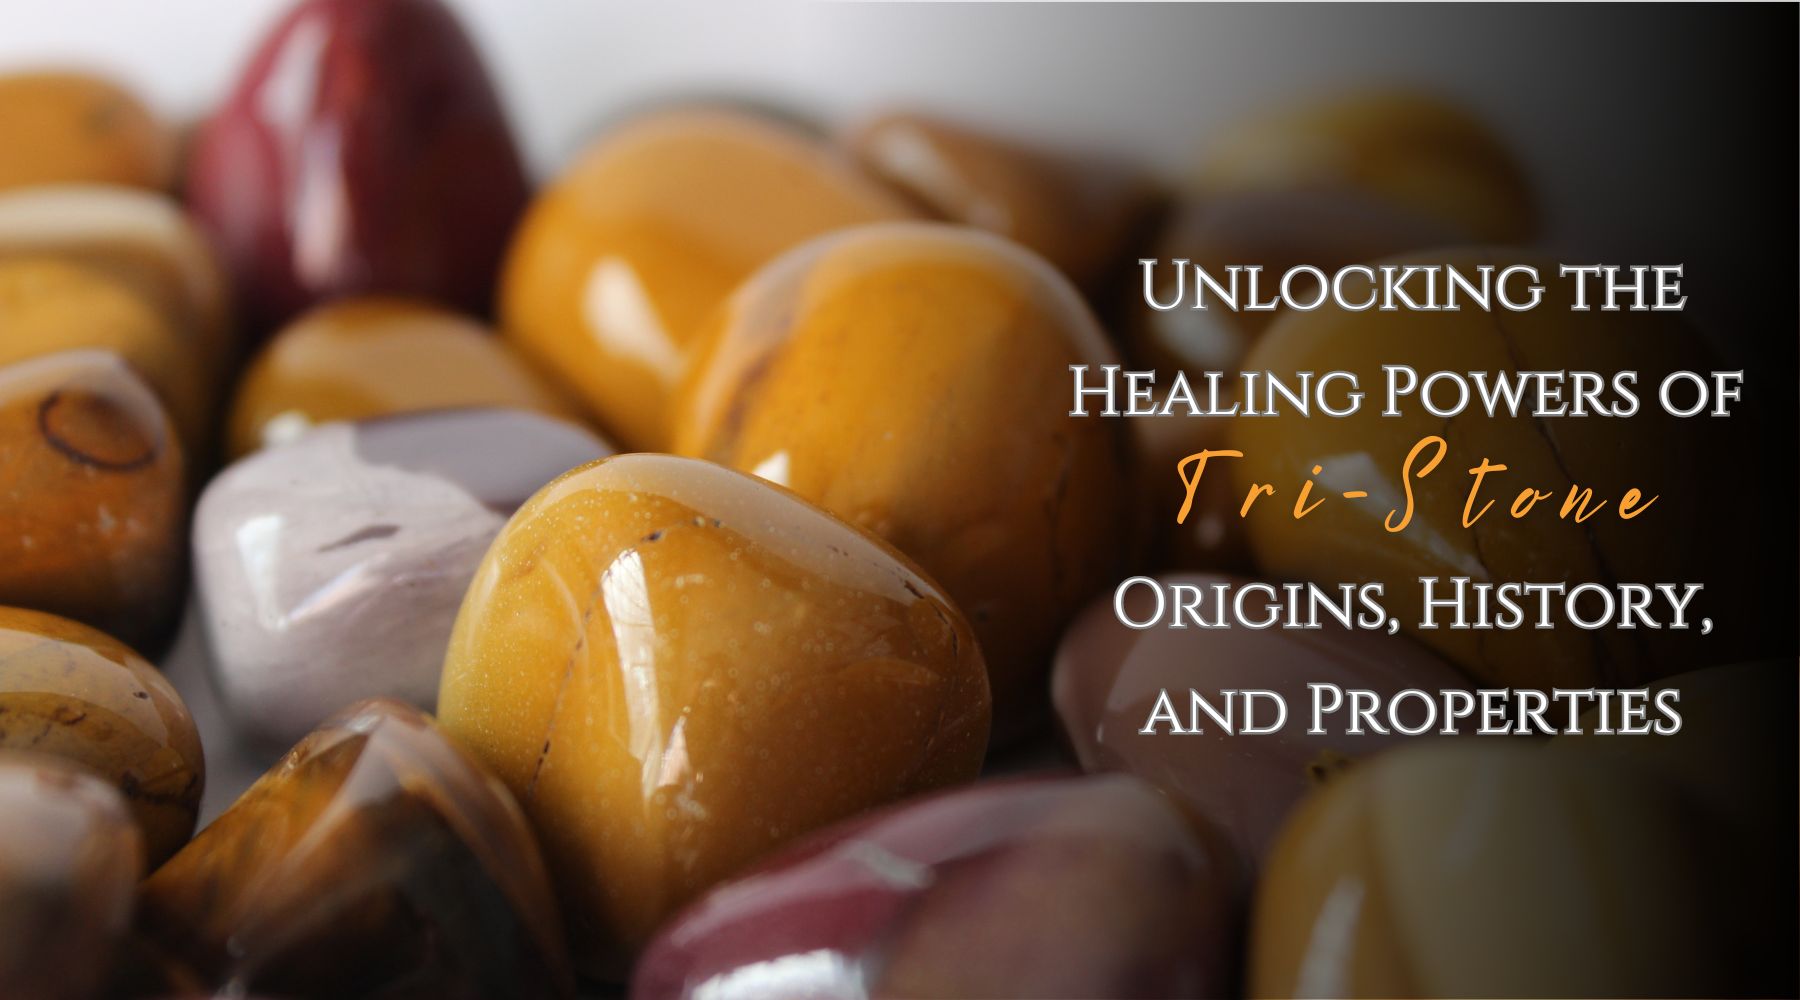 Unlocking the Healing Powers of Tri-Stone: Origins, History, and Properties